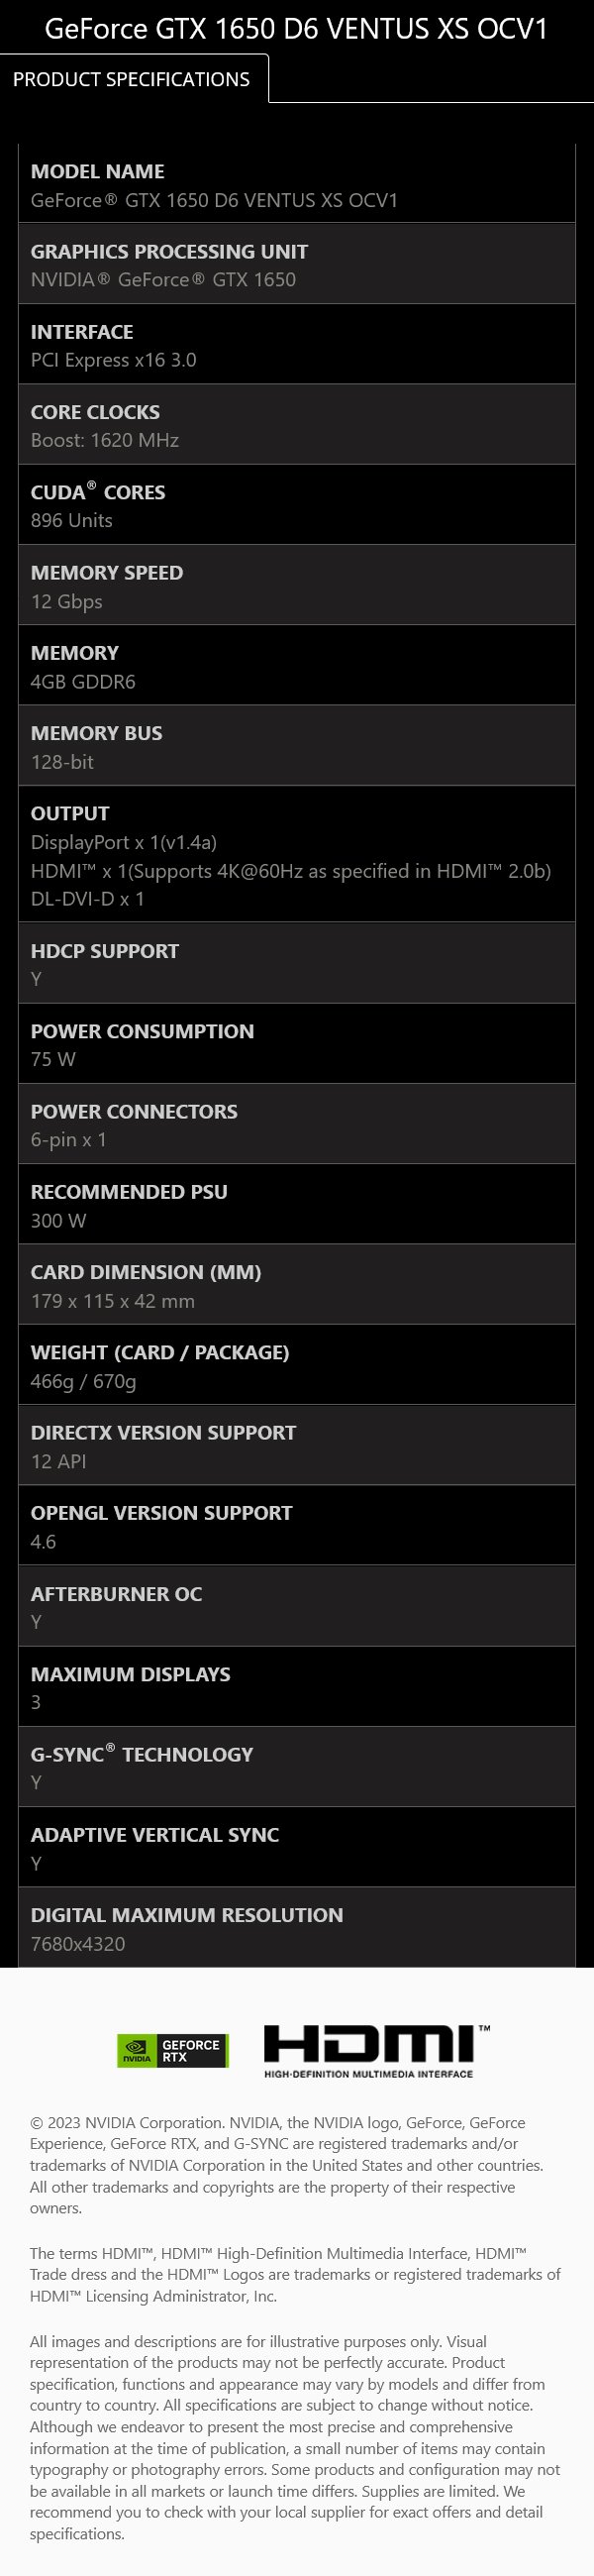 MSI GeForce GTX 1650 D6 VENTUS XS OC V1 4GB Video Card - Specs